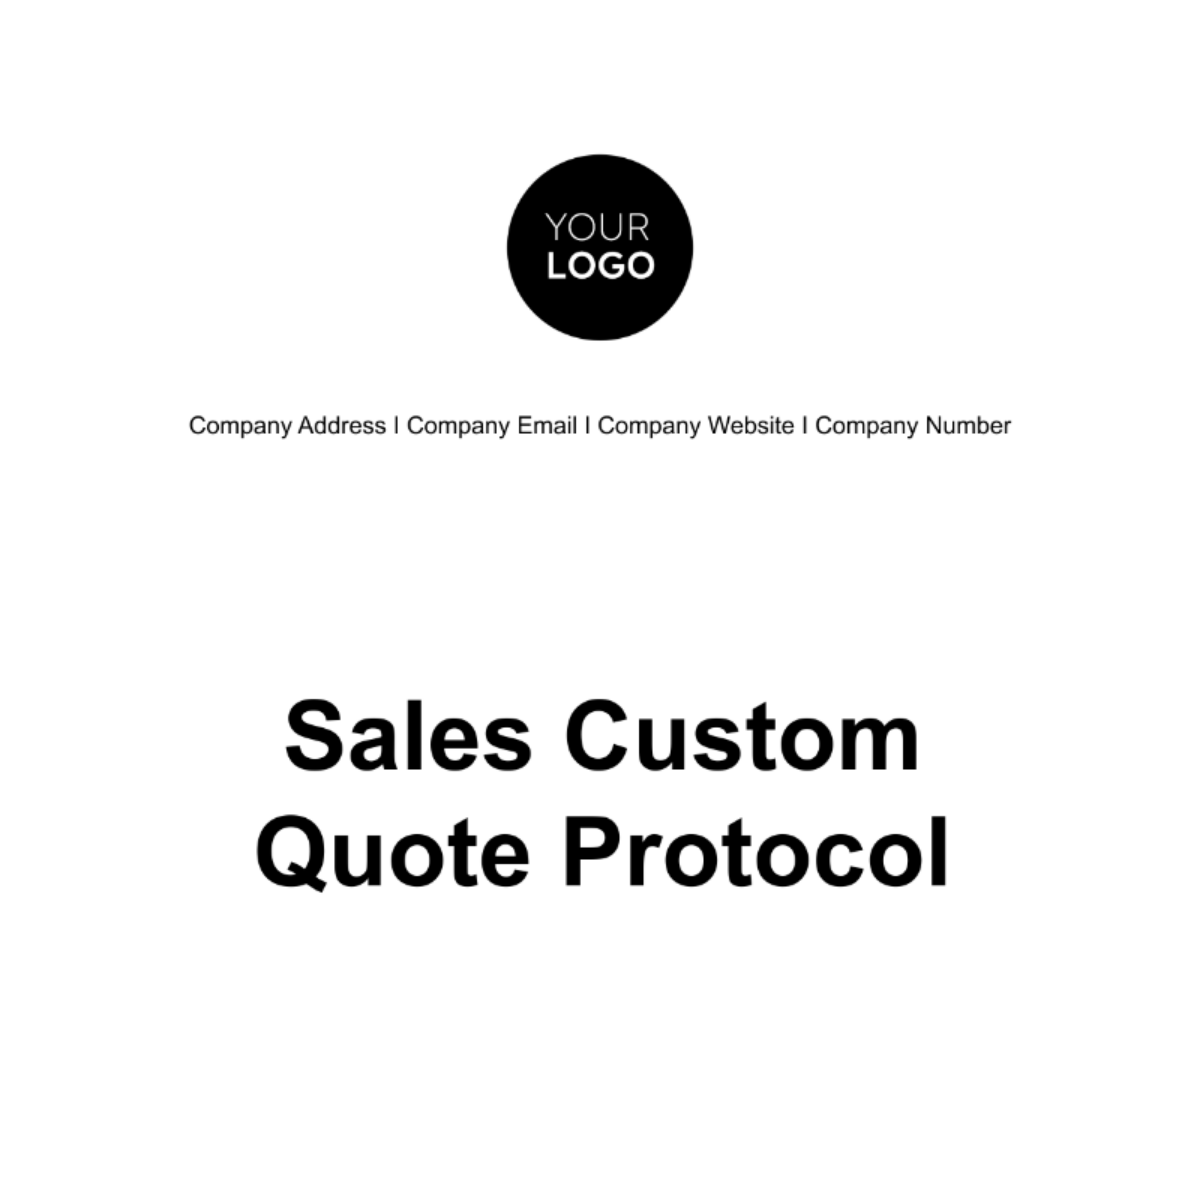 Free Sales Custom Quote Protocol Template